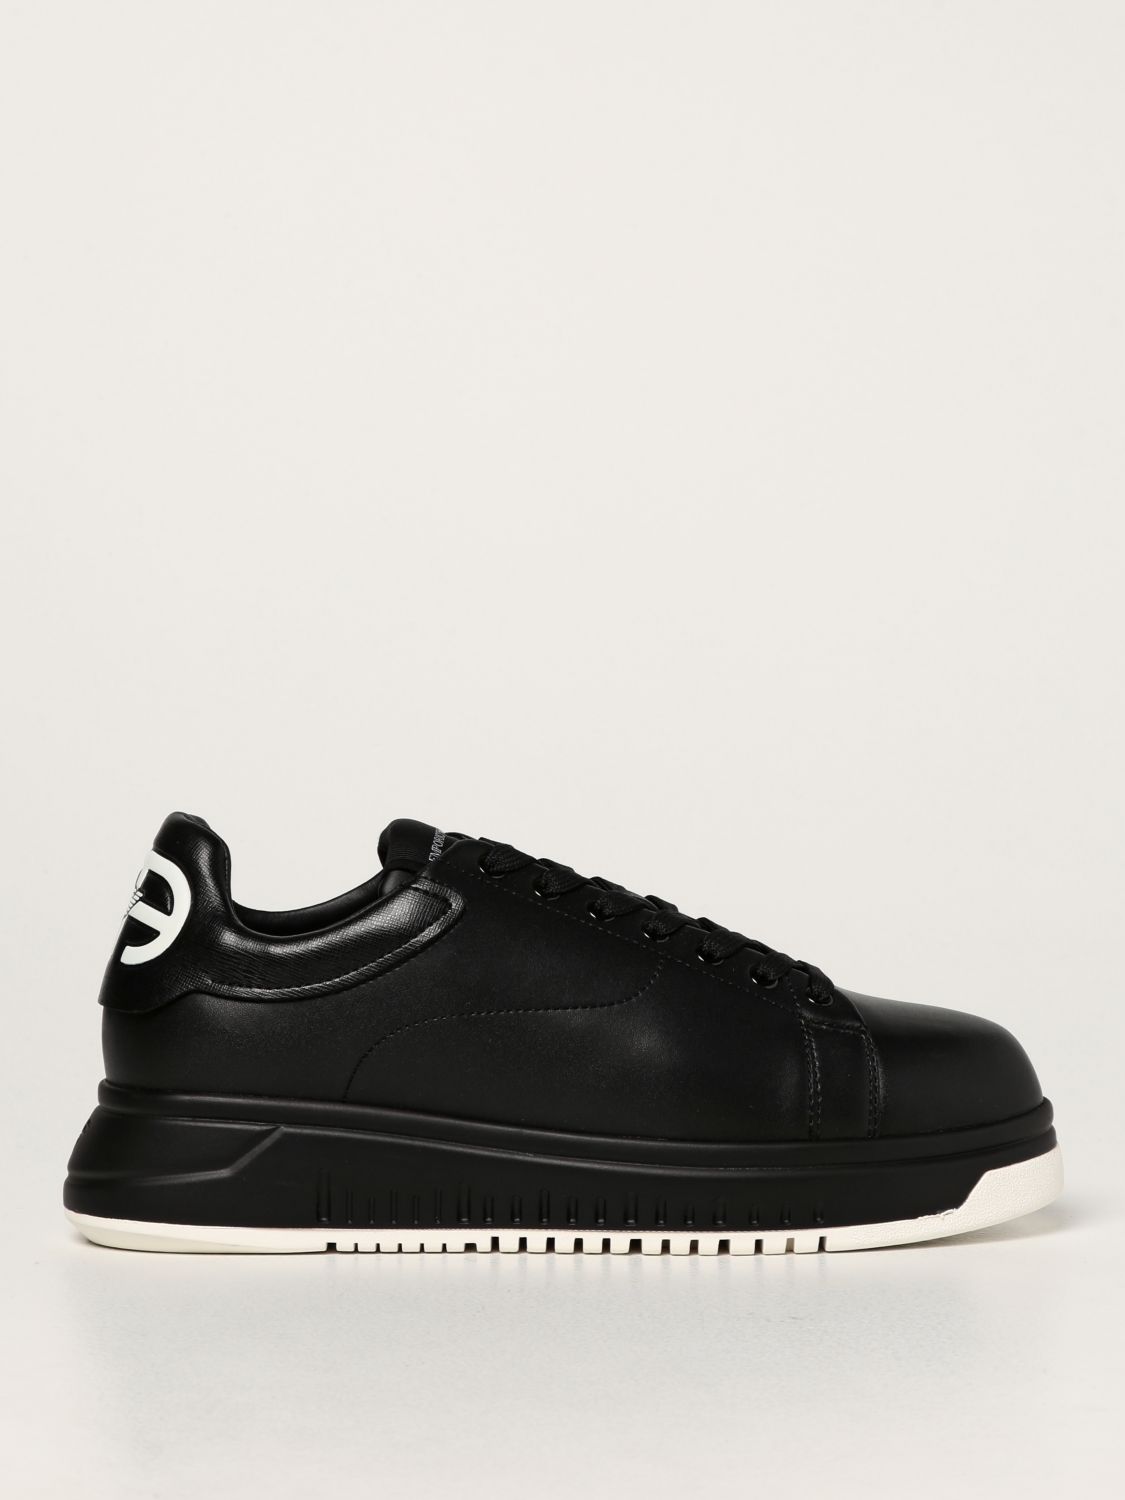 Emporio Armani sneakers in leather